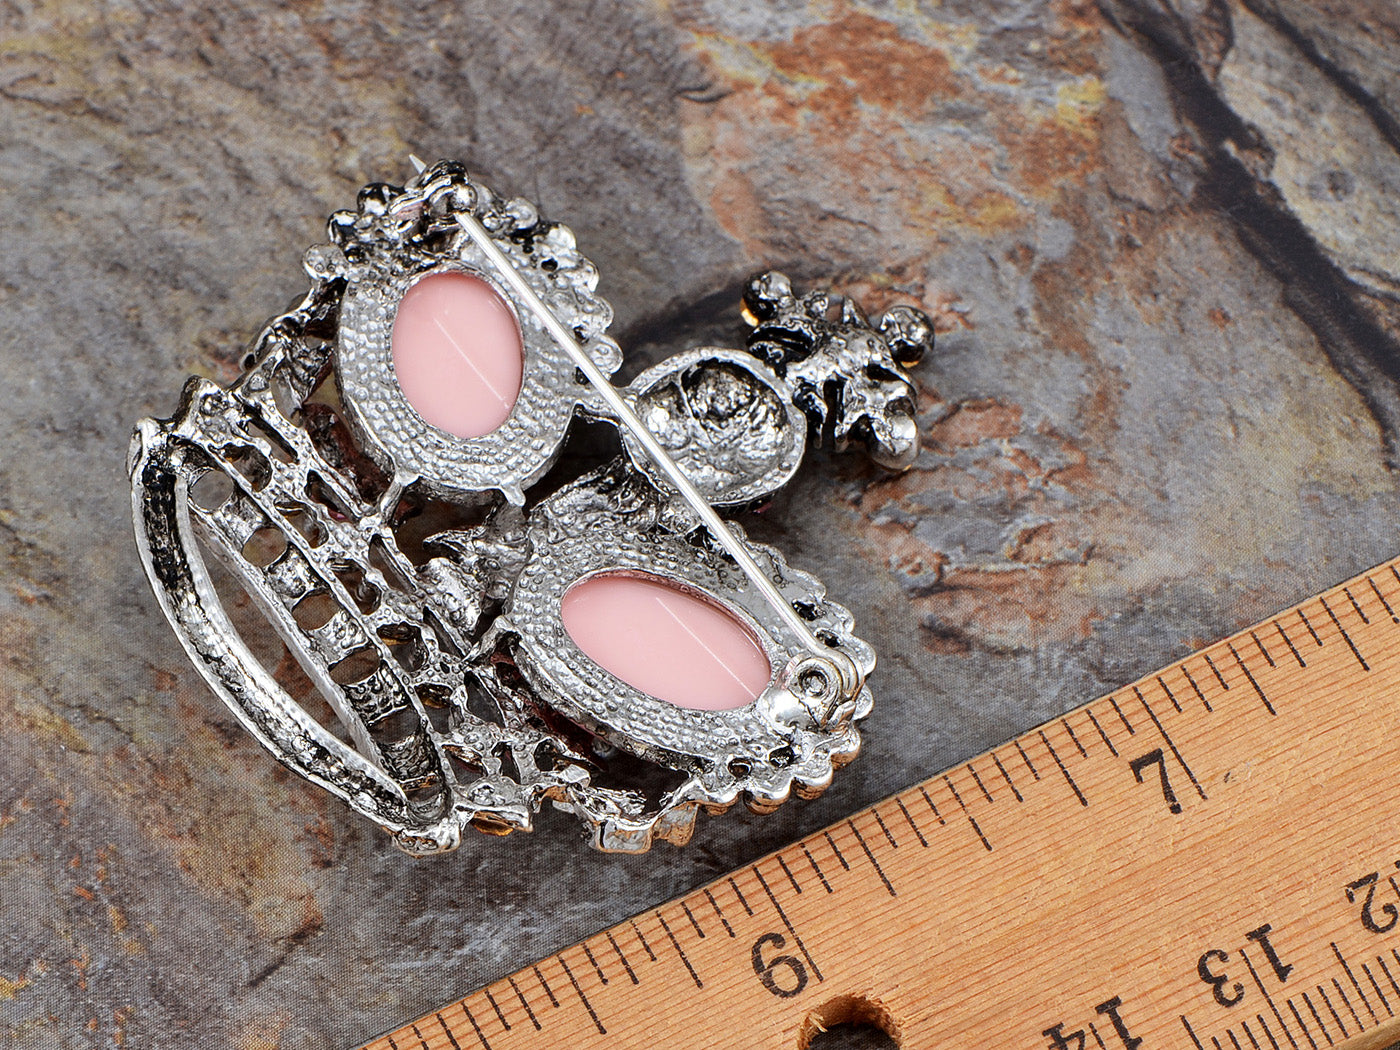 Antique Brass Shine Pink Princess Queen Crown Brooch Pin